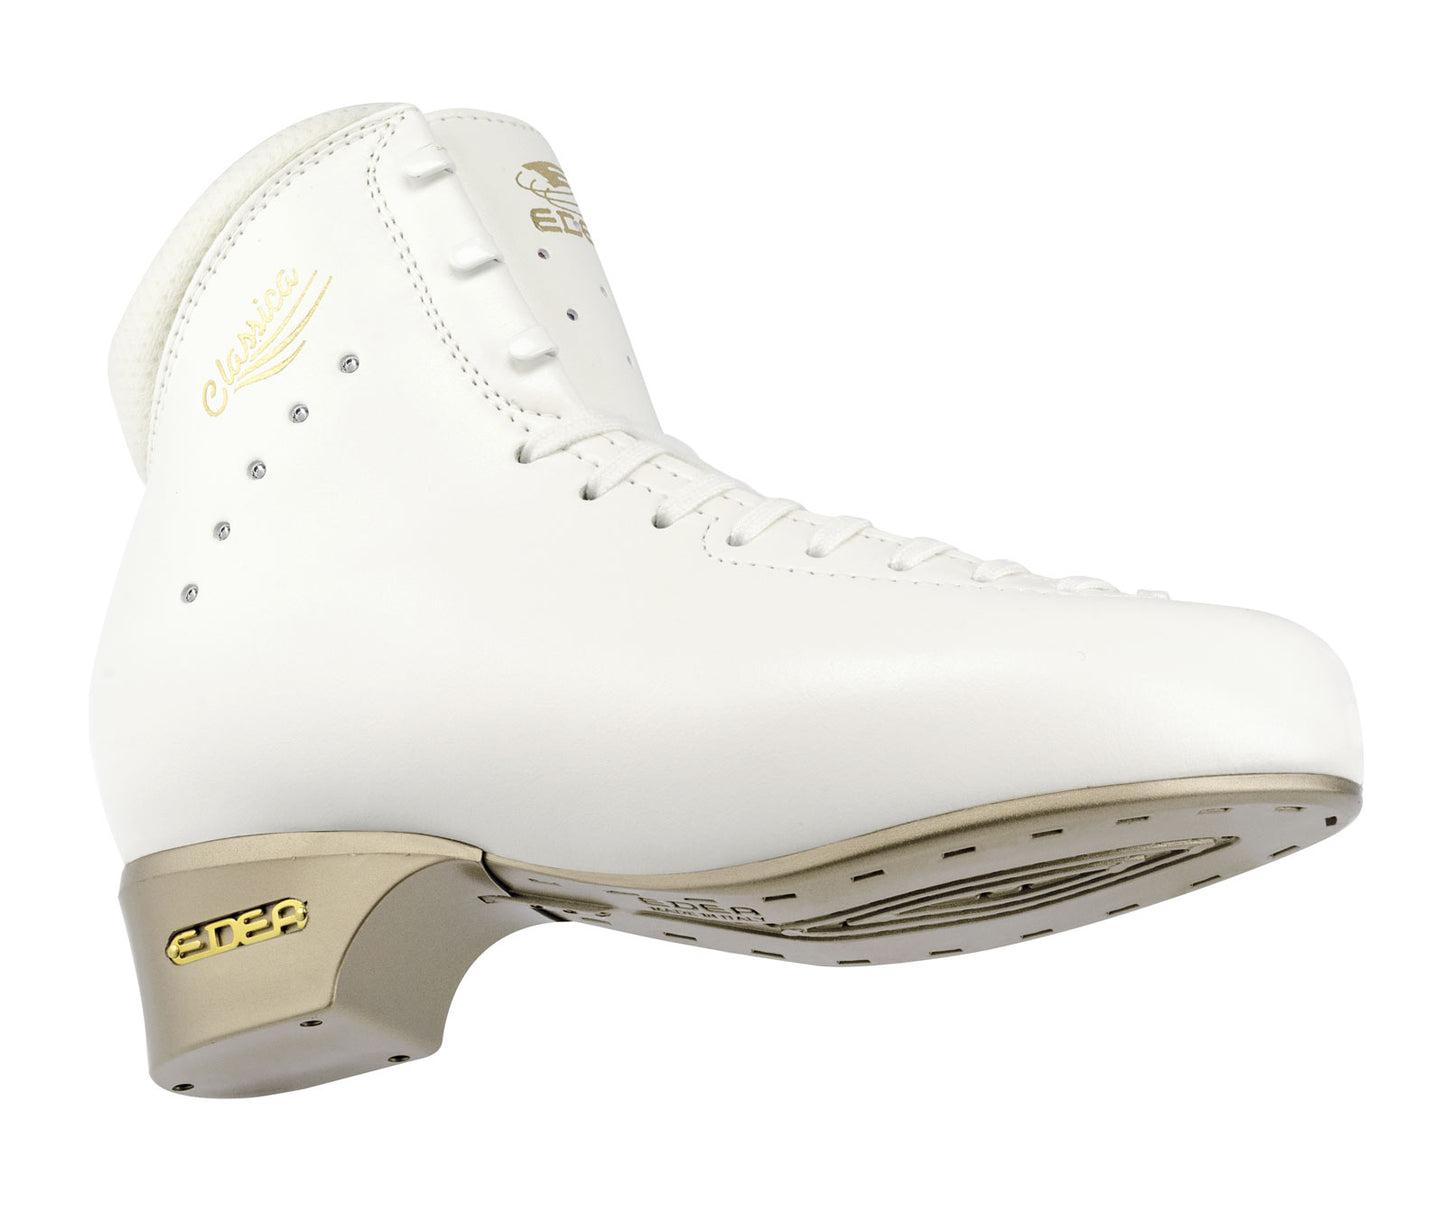 Edea Classica Roller Inline Skate Boots in White or Black